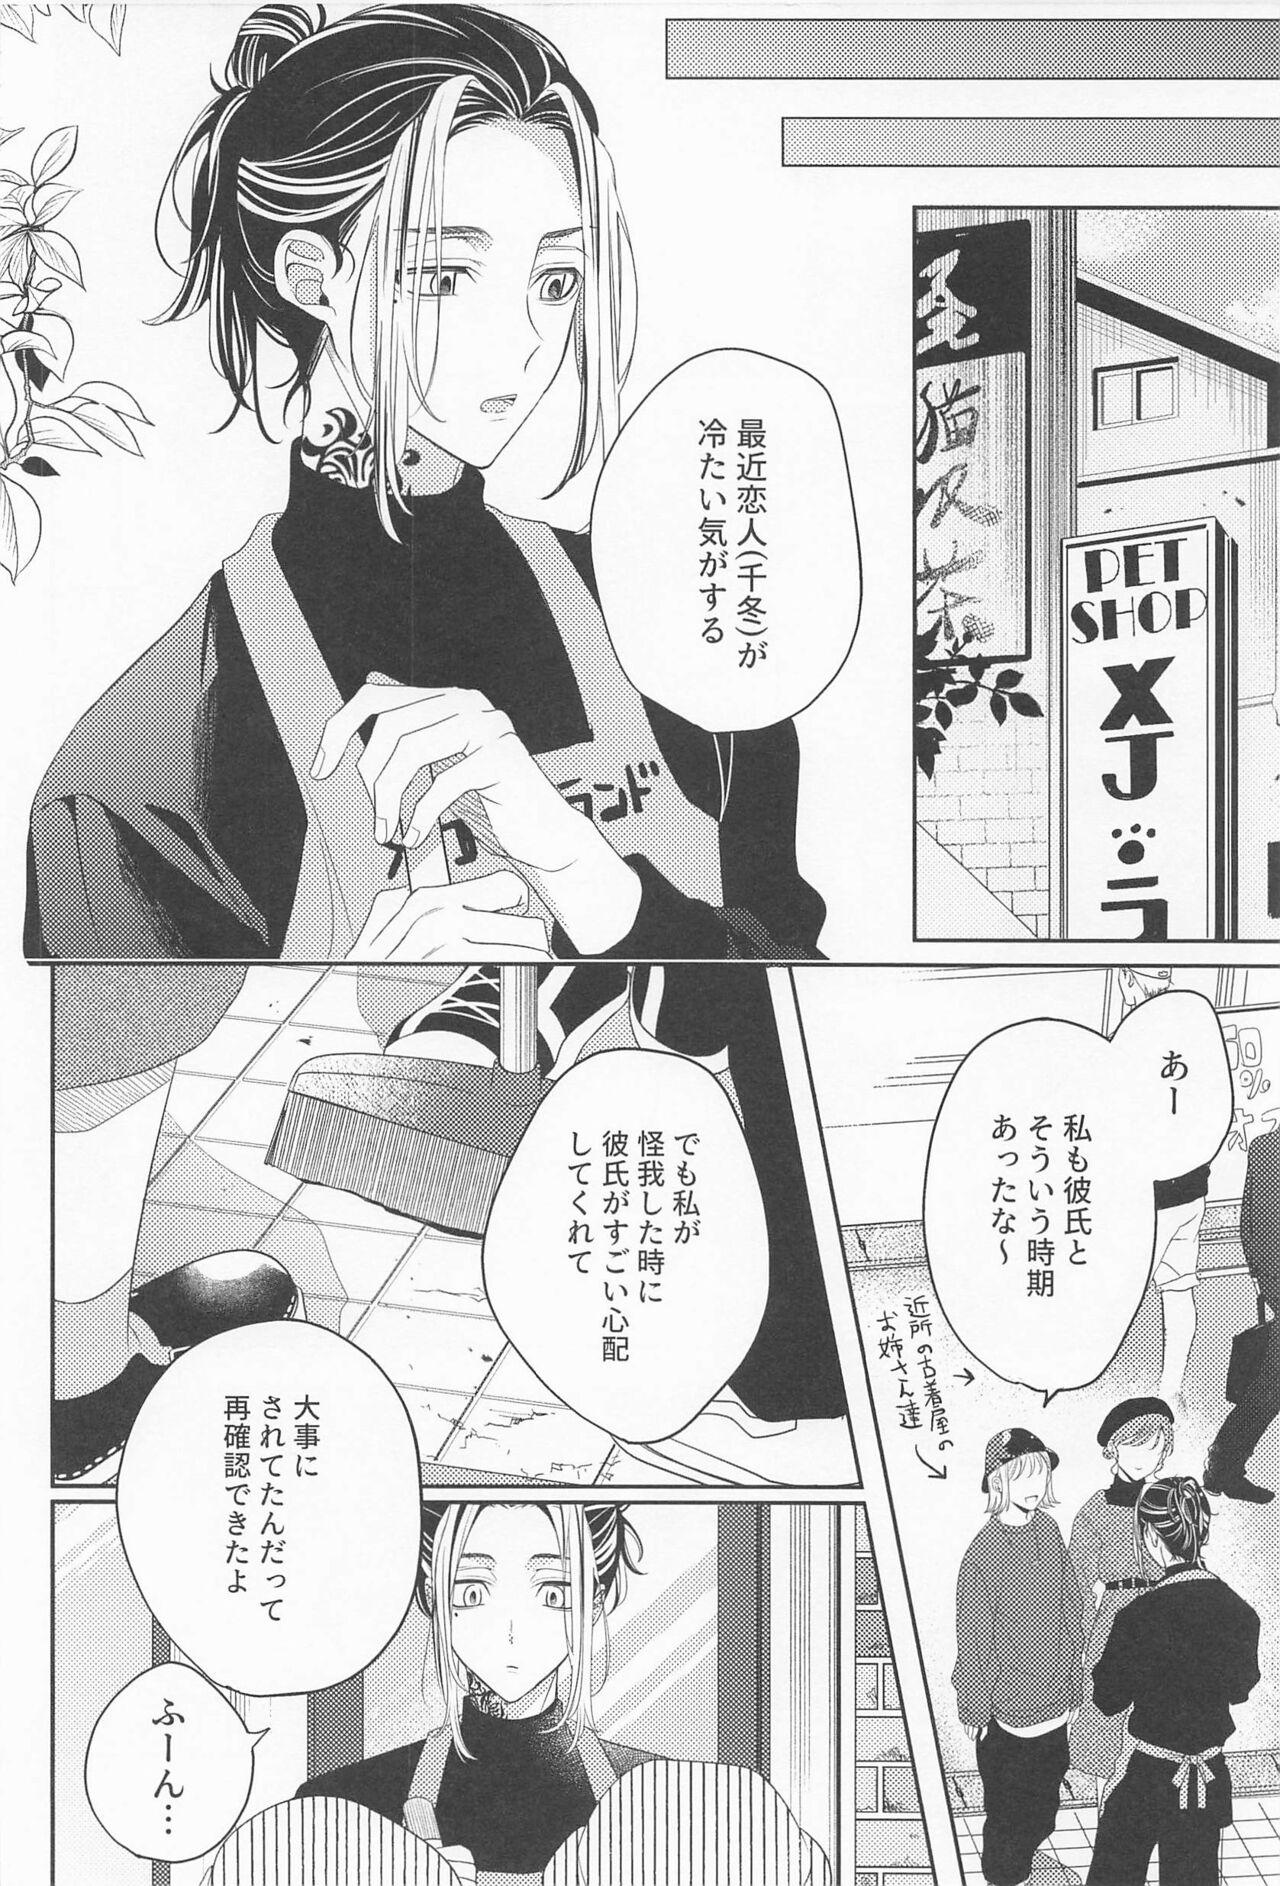 Her sukidakarashimpaishite - Tokyo revengers Highschool - Page 5